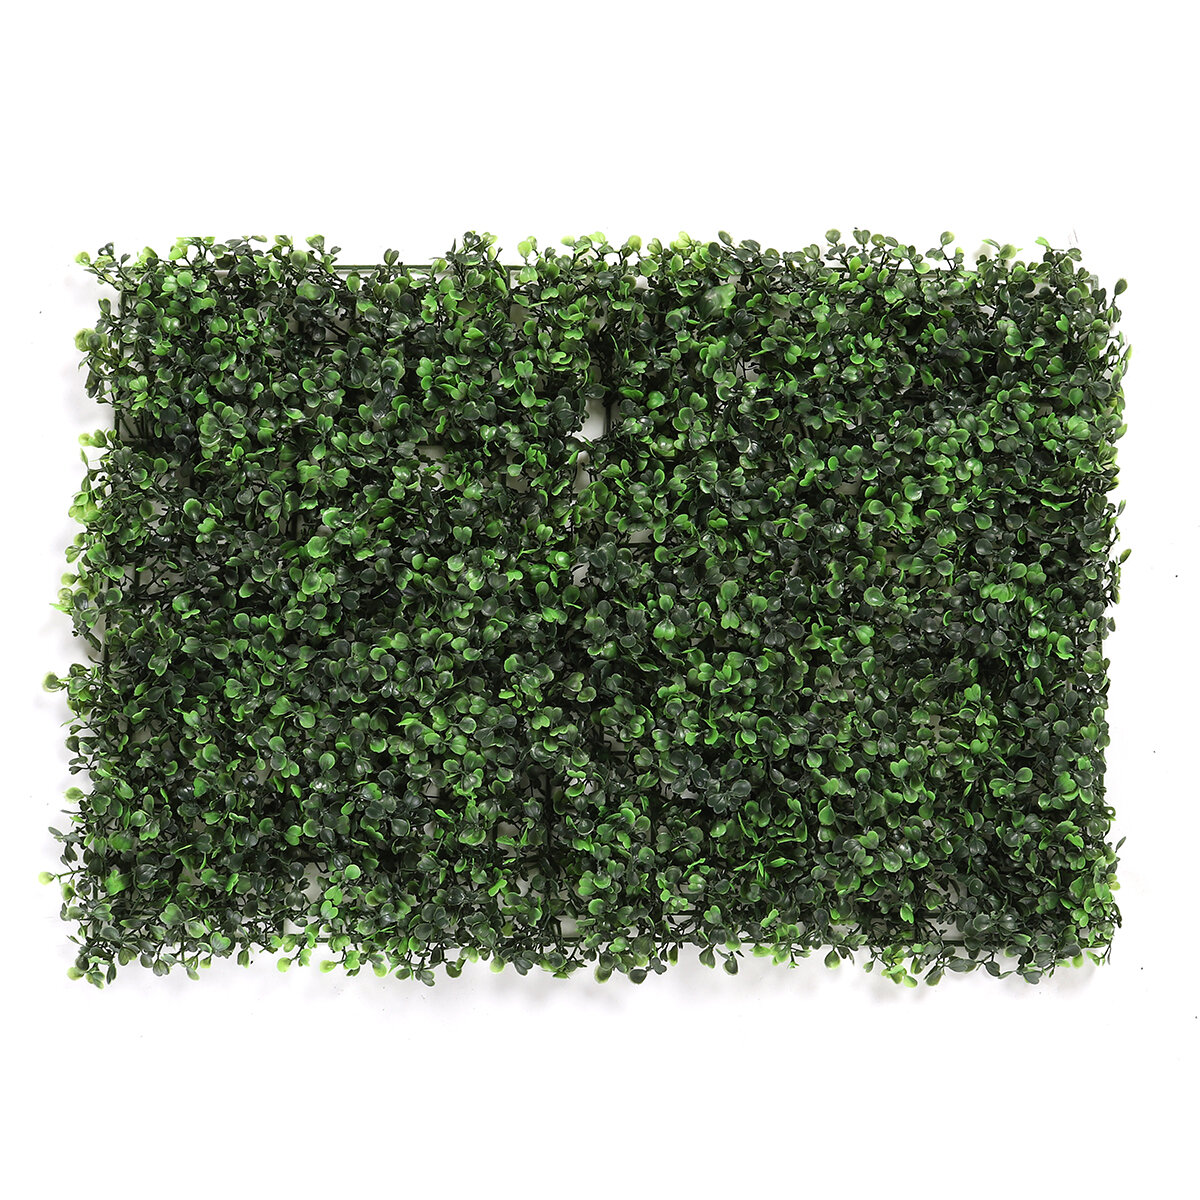 Image of 60x40cm Artificial Plants Lawn Hedge Vertical Garden Green Wall Mat